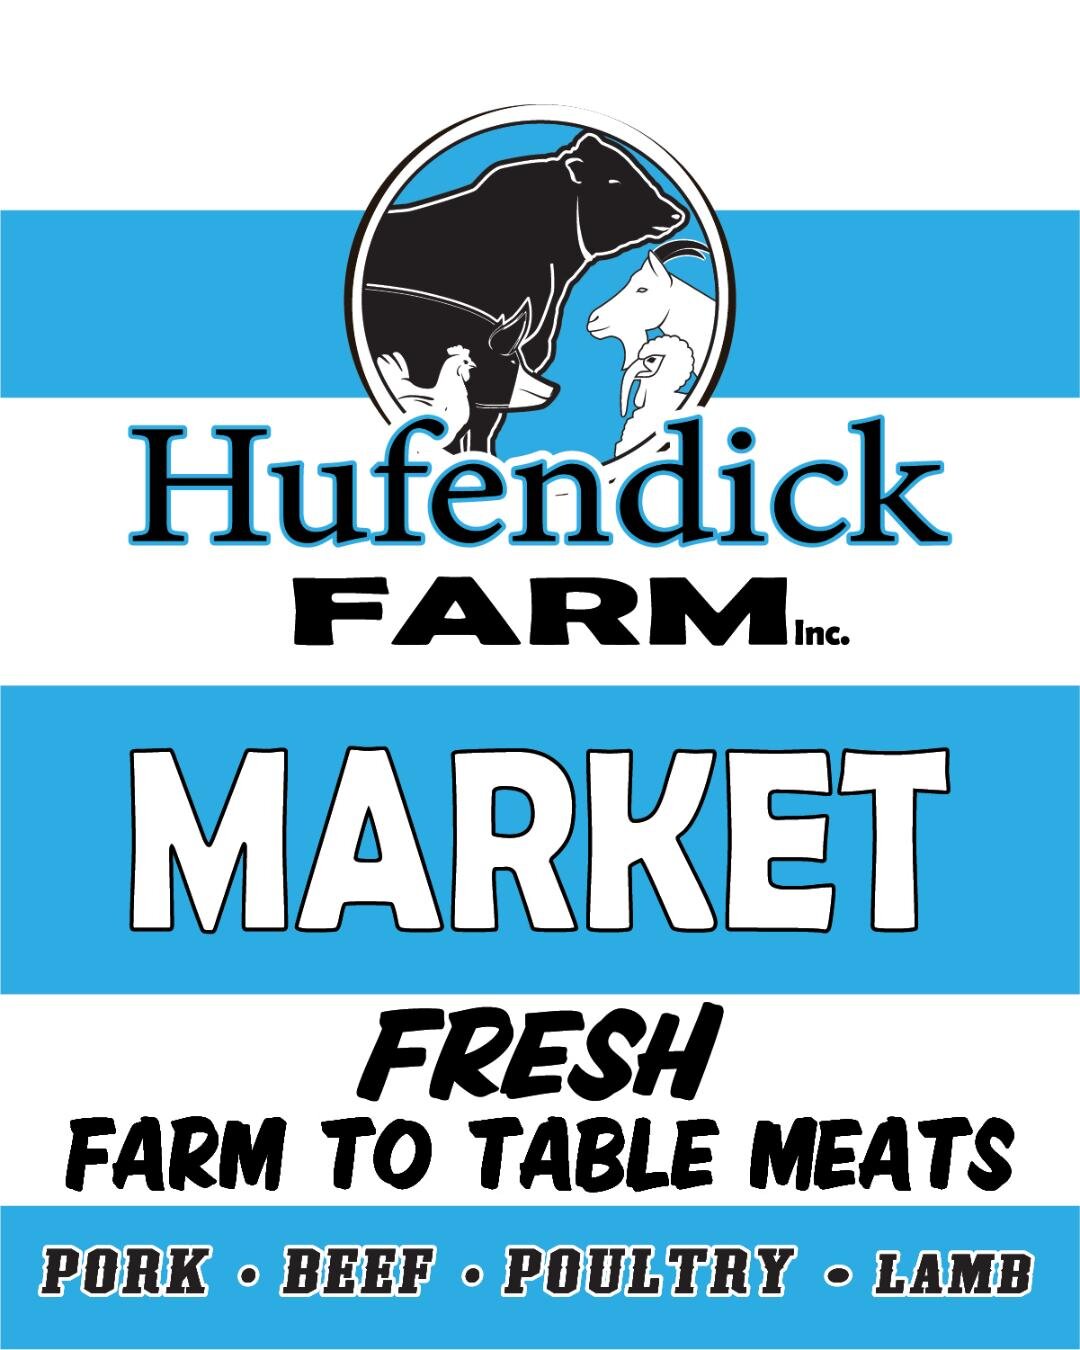 Hufendick Farm Market